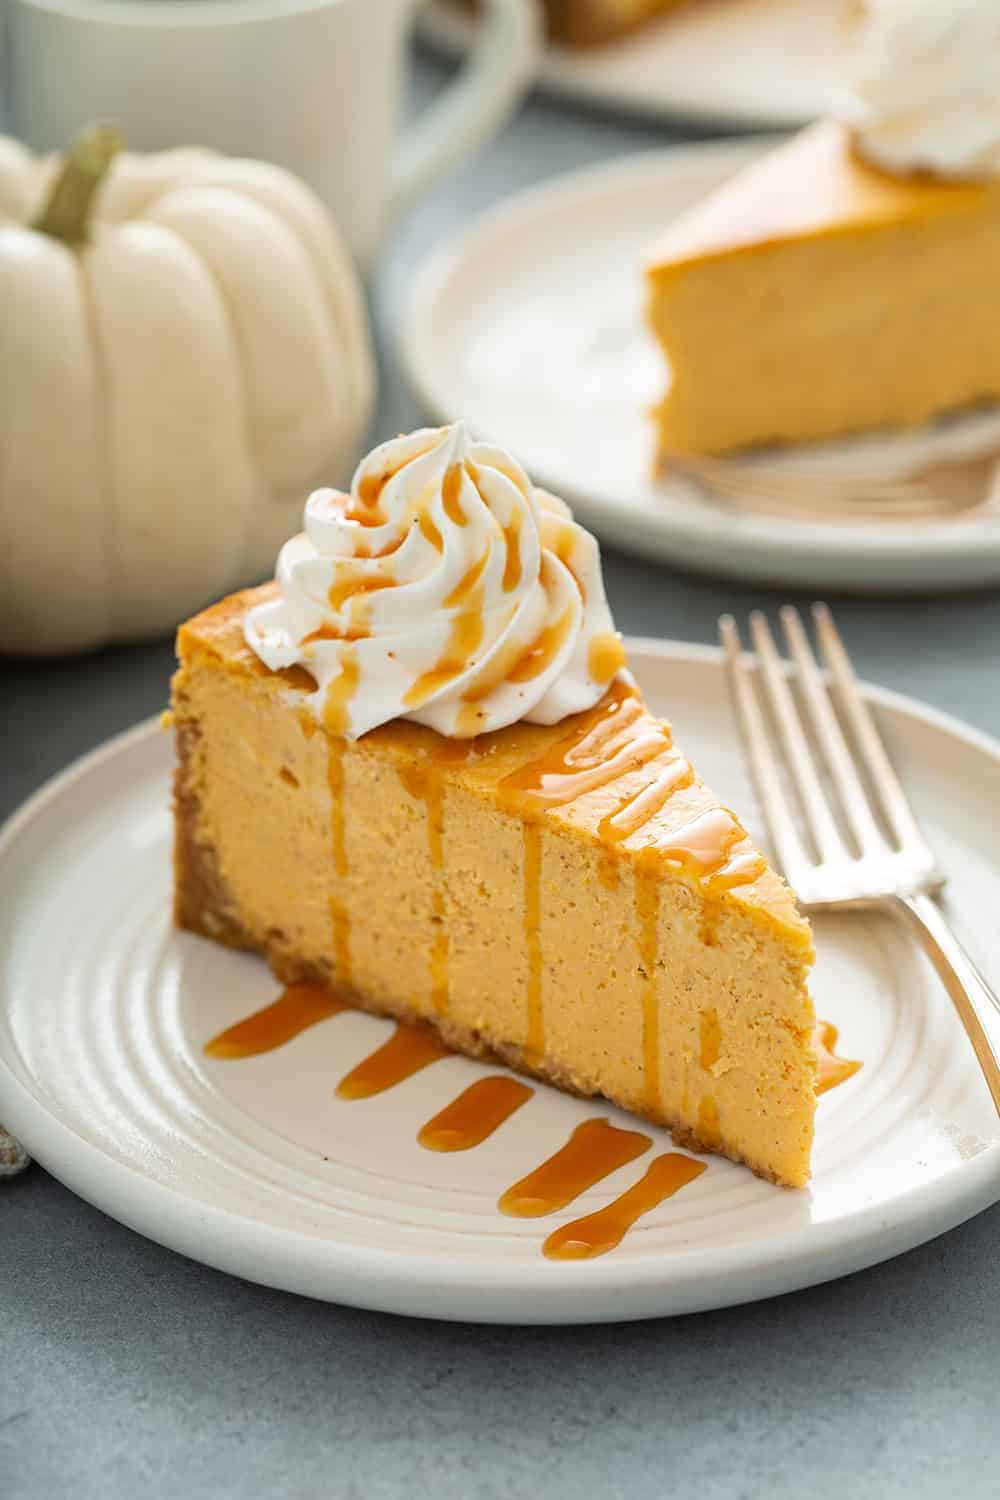 https://www.mybakingaddiction.com/wp-content/uploads/2012/11/plated-slice-pumpkin-cheesecake.jpg